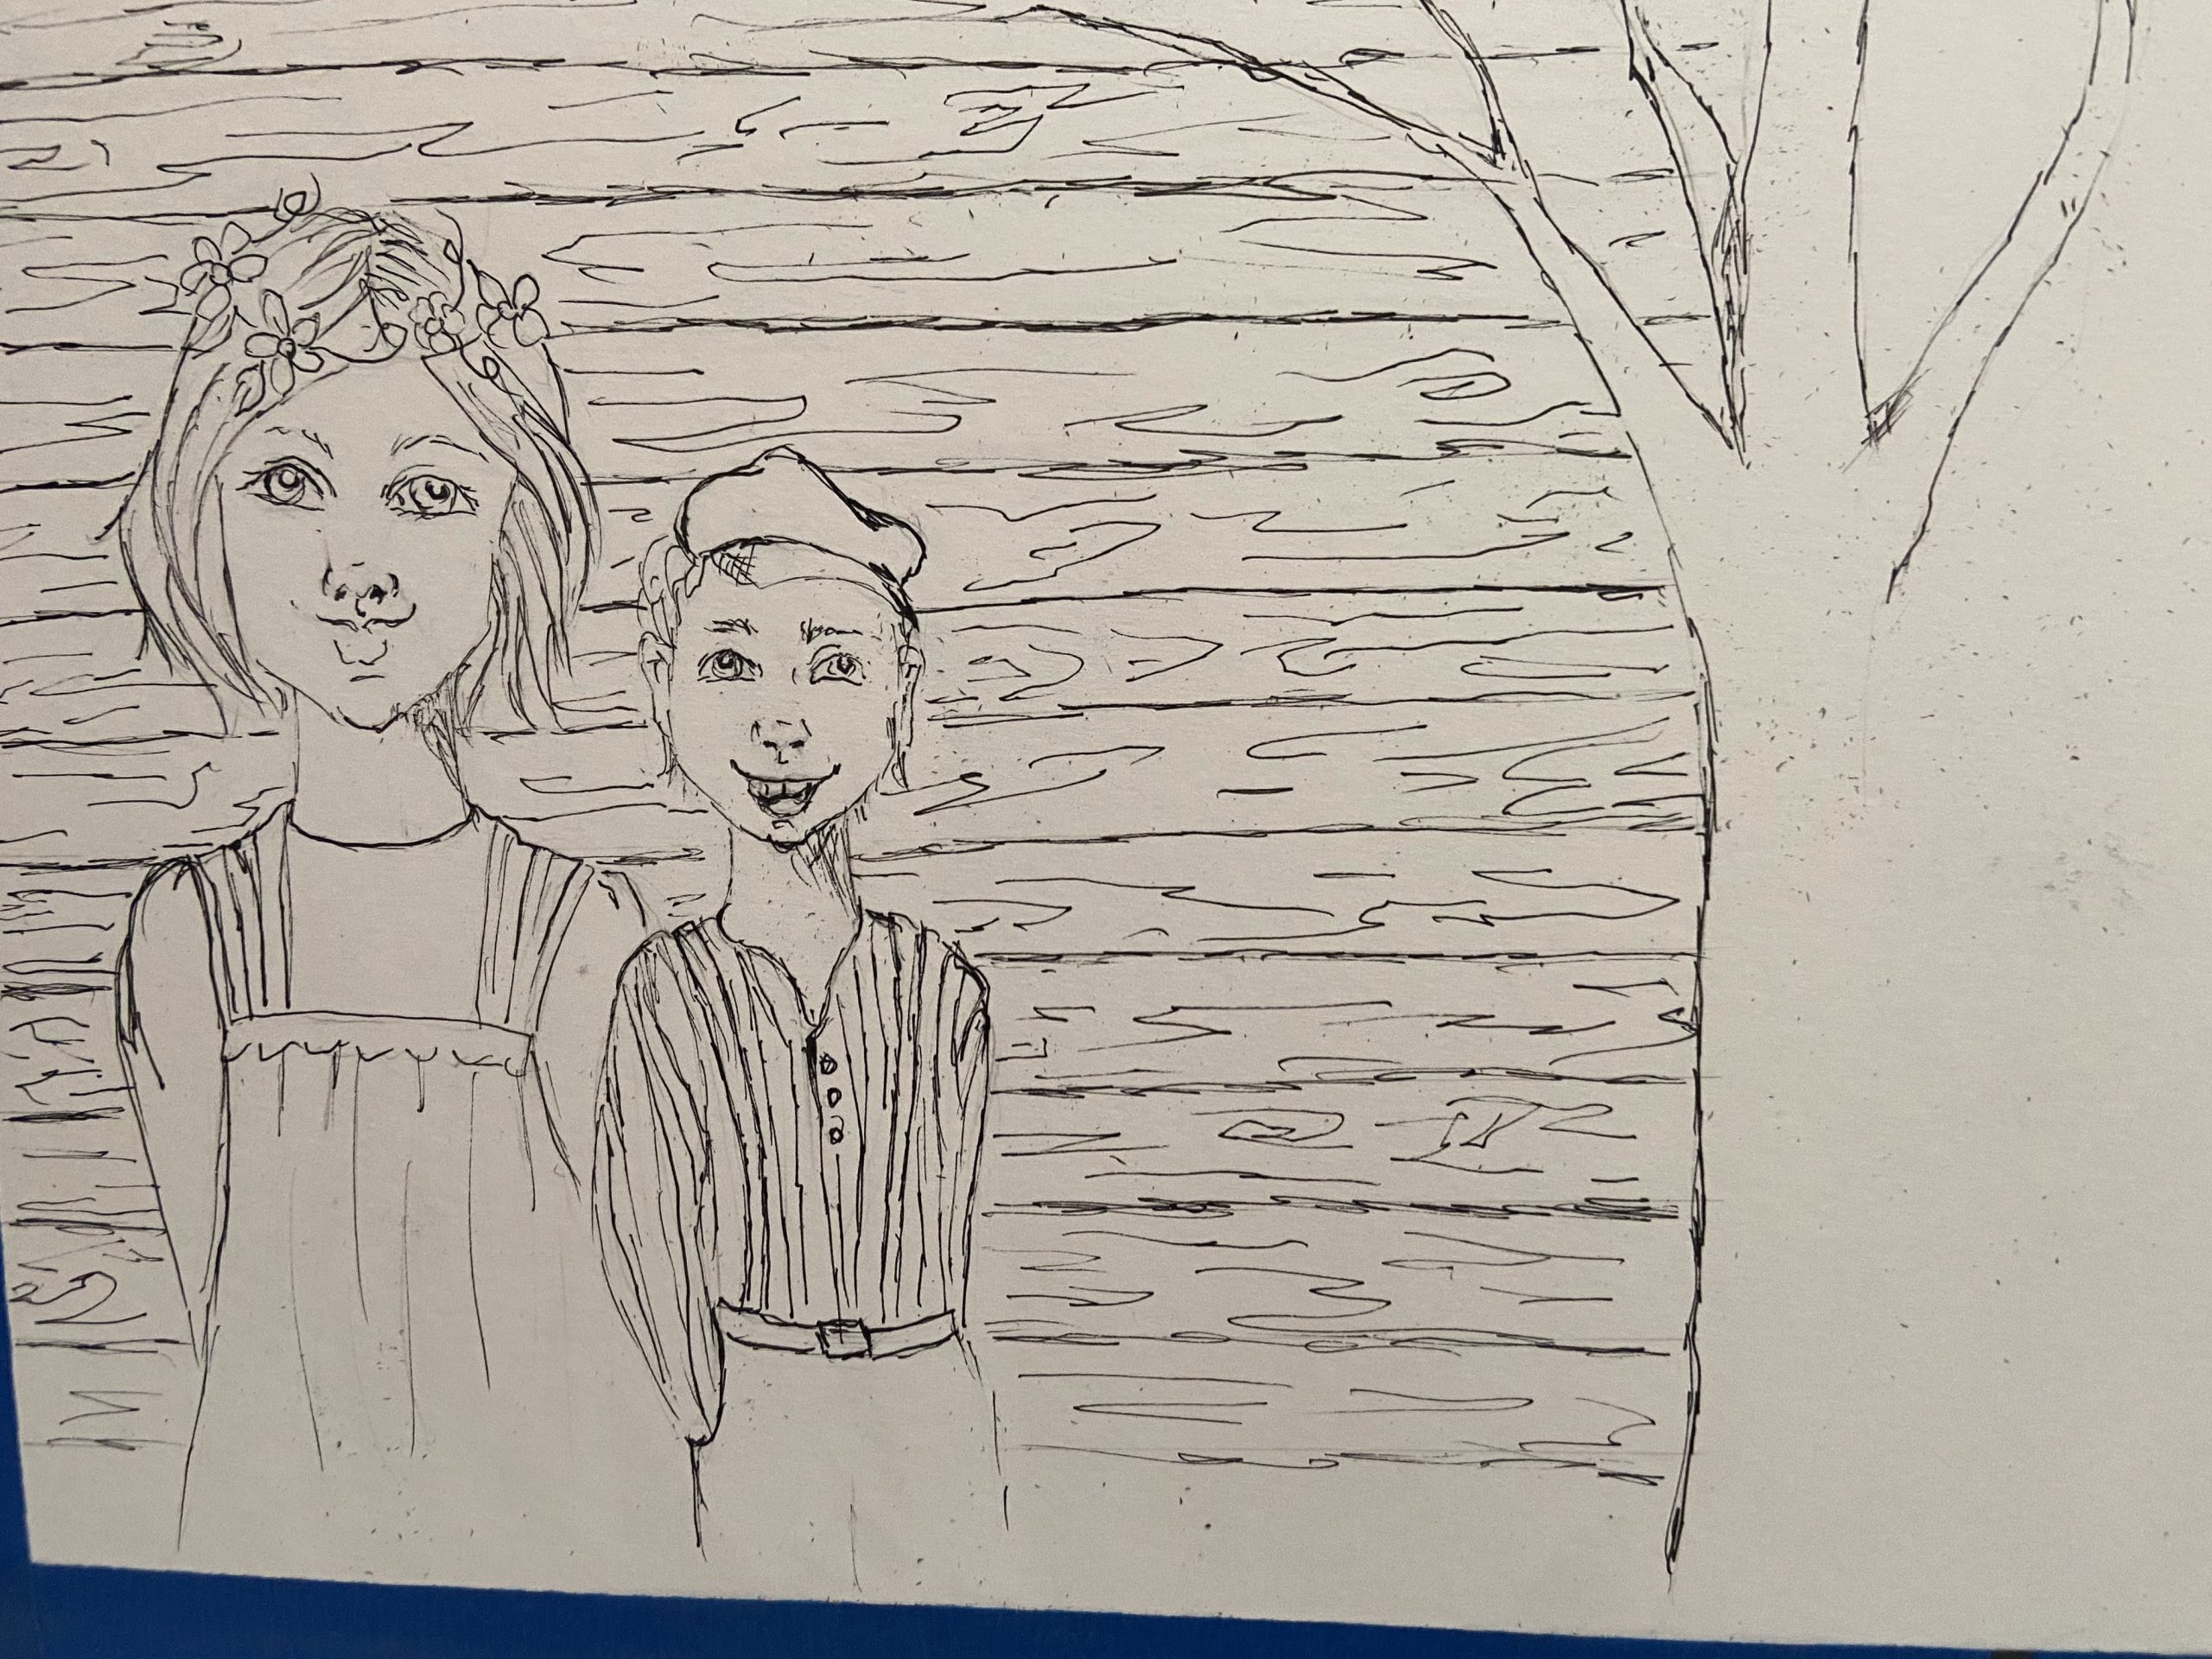 Ink sketch of two children inspire by Astrid Lindgren stories